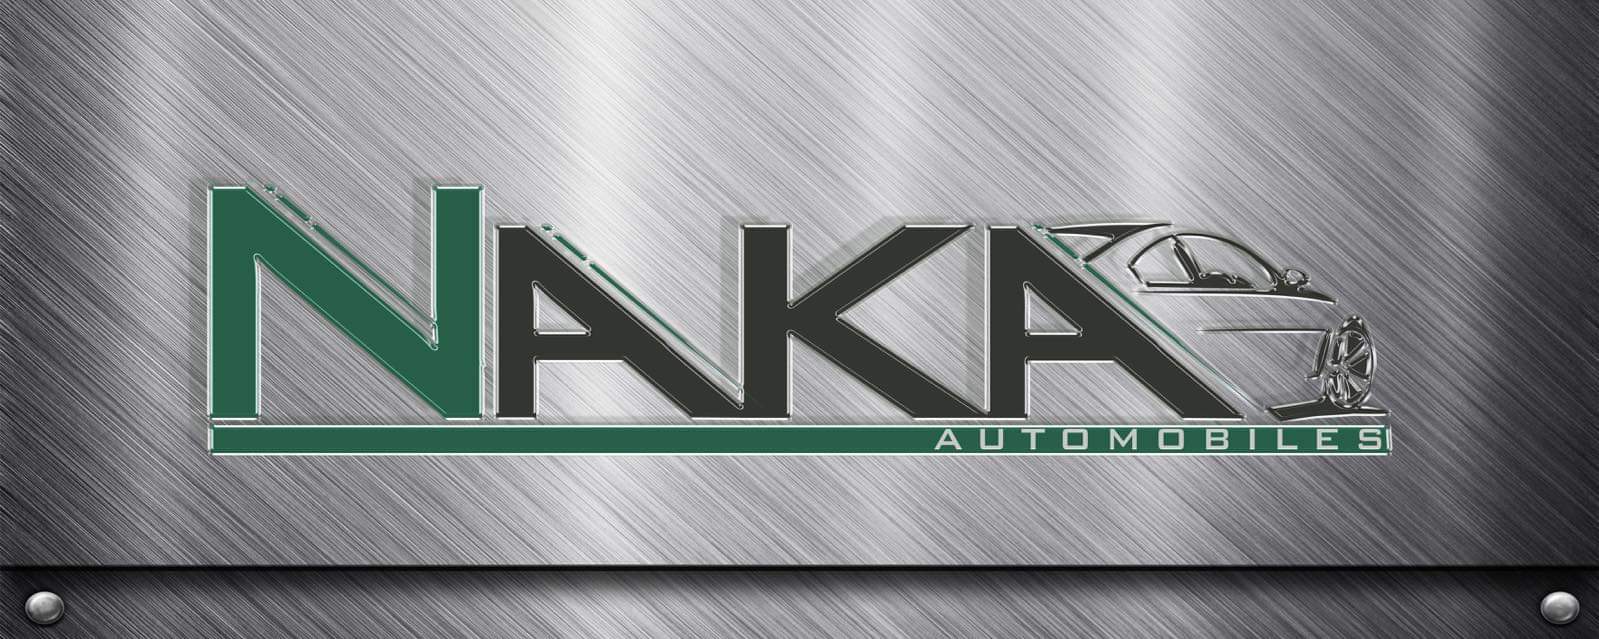 NAKA Automobiles 77 logo